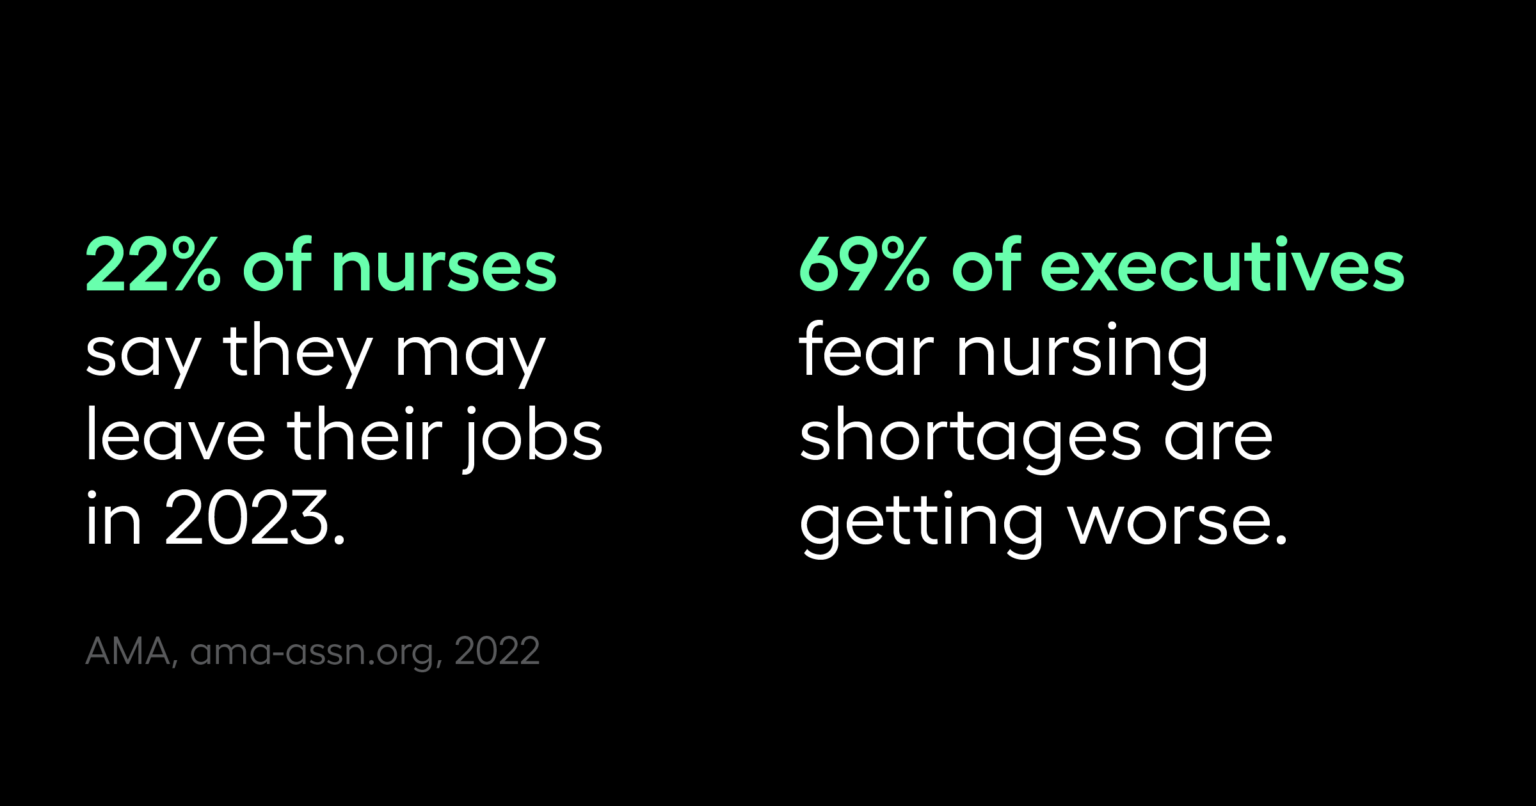 69% of executives fear nursing shortages